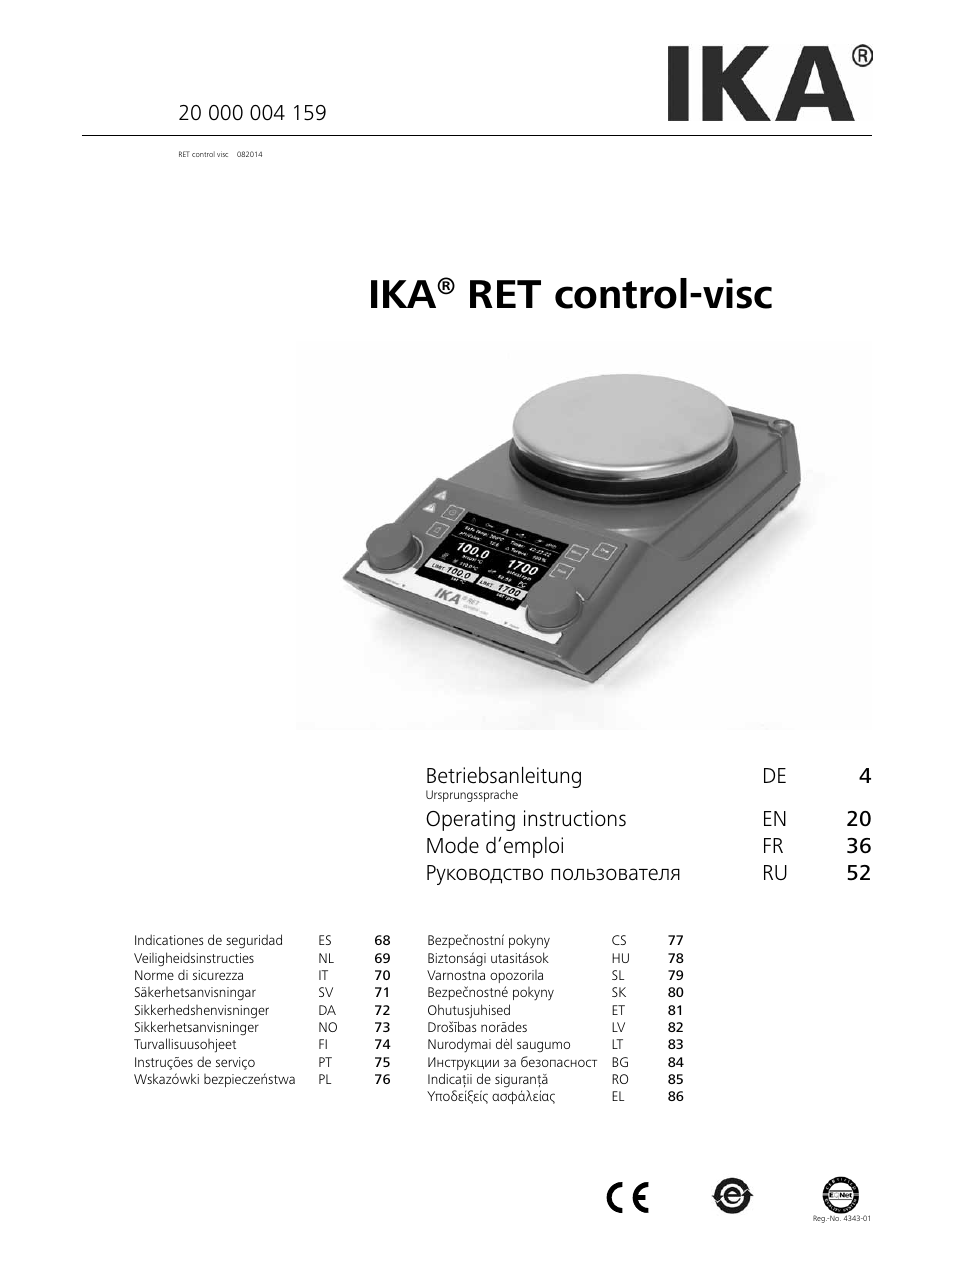 IKA RET control-visc User Manual | 88 pages